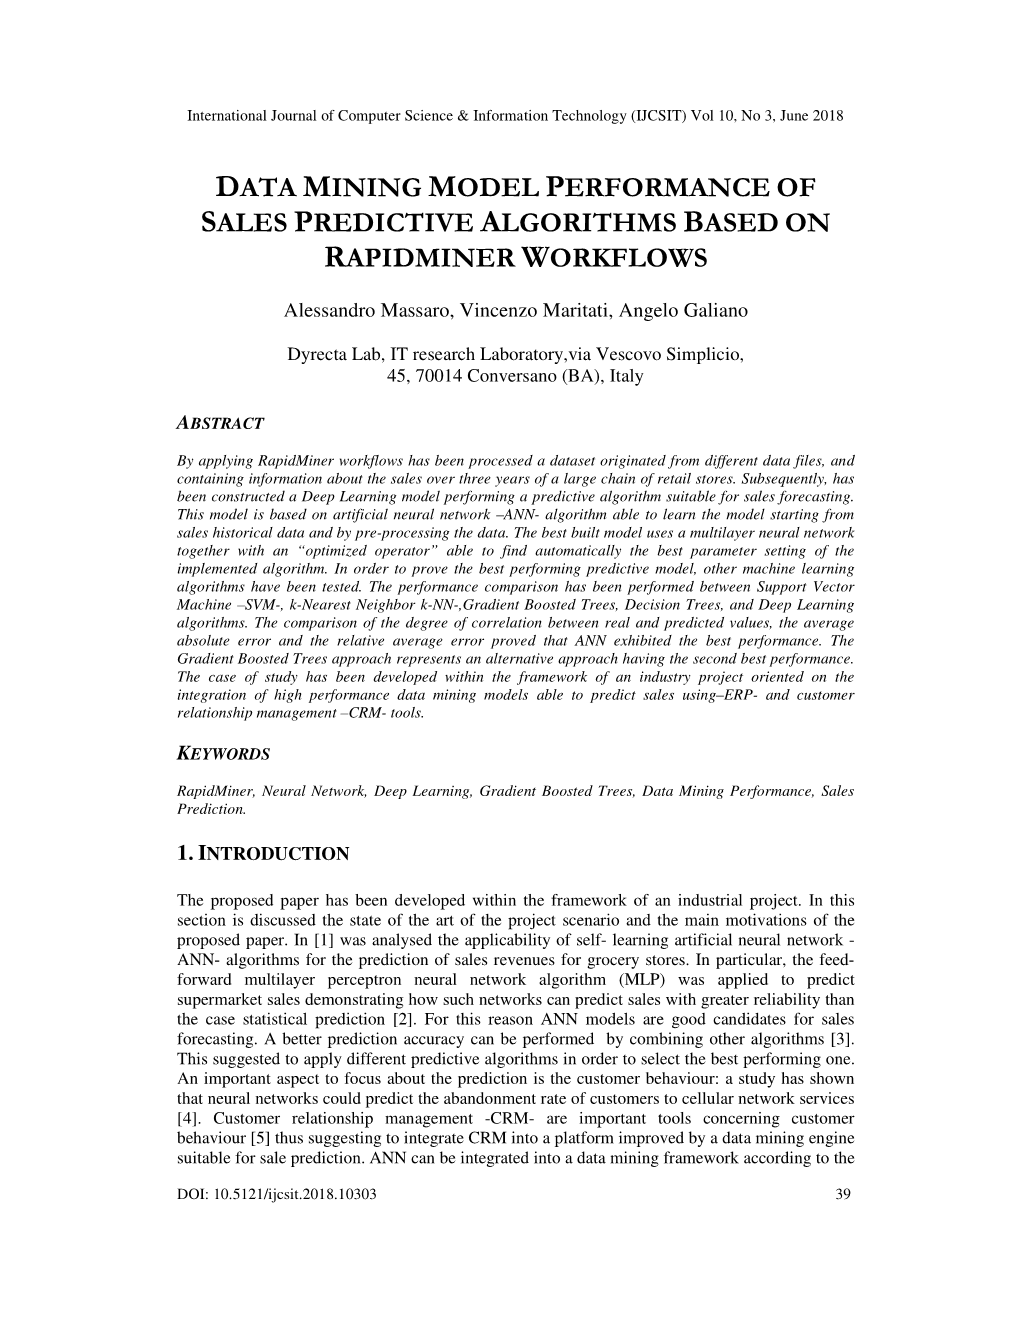 Data Mining Model Performance of Sales Predictive Algorithms Based on Rapidminer Workflows